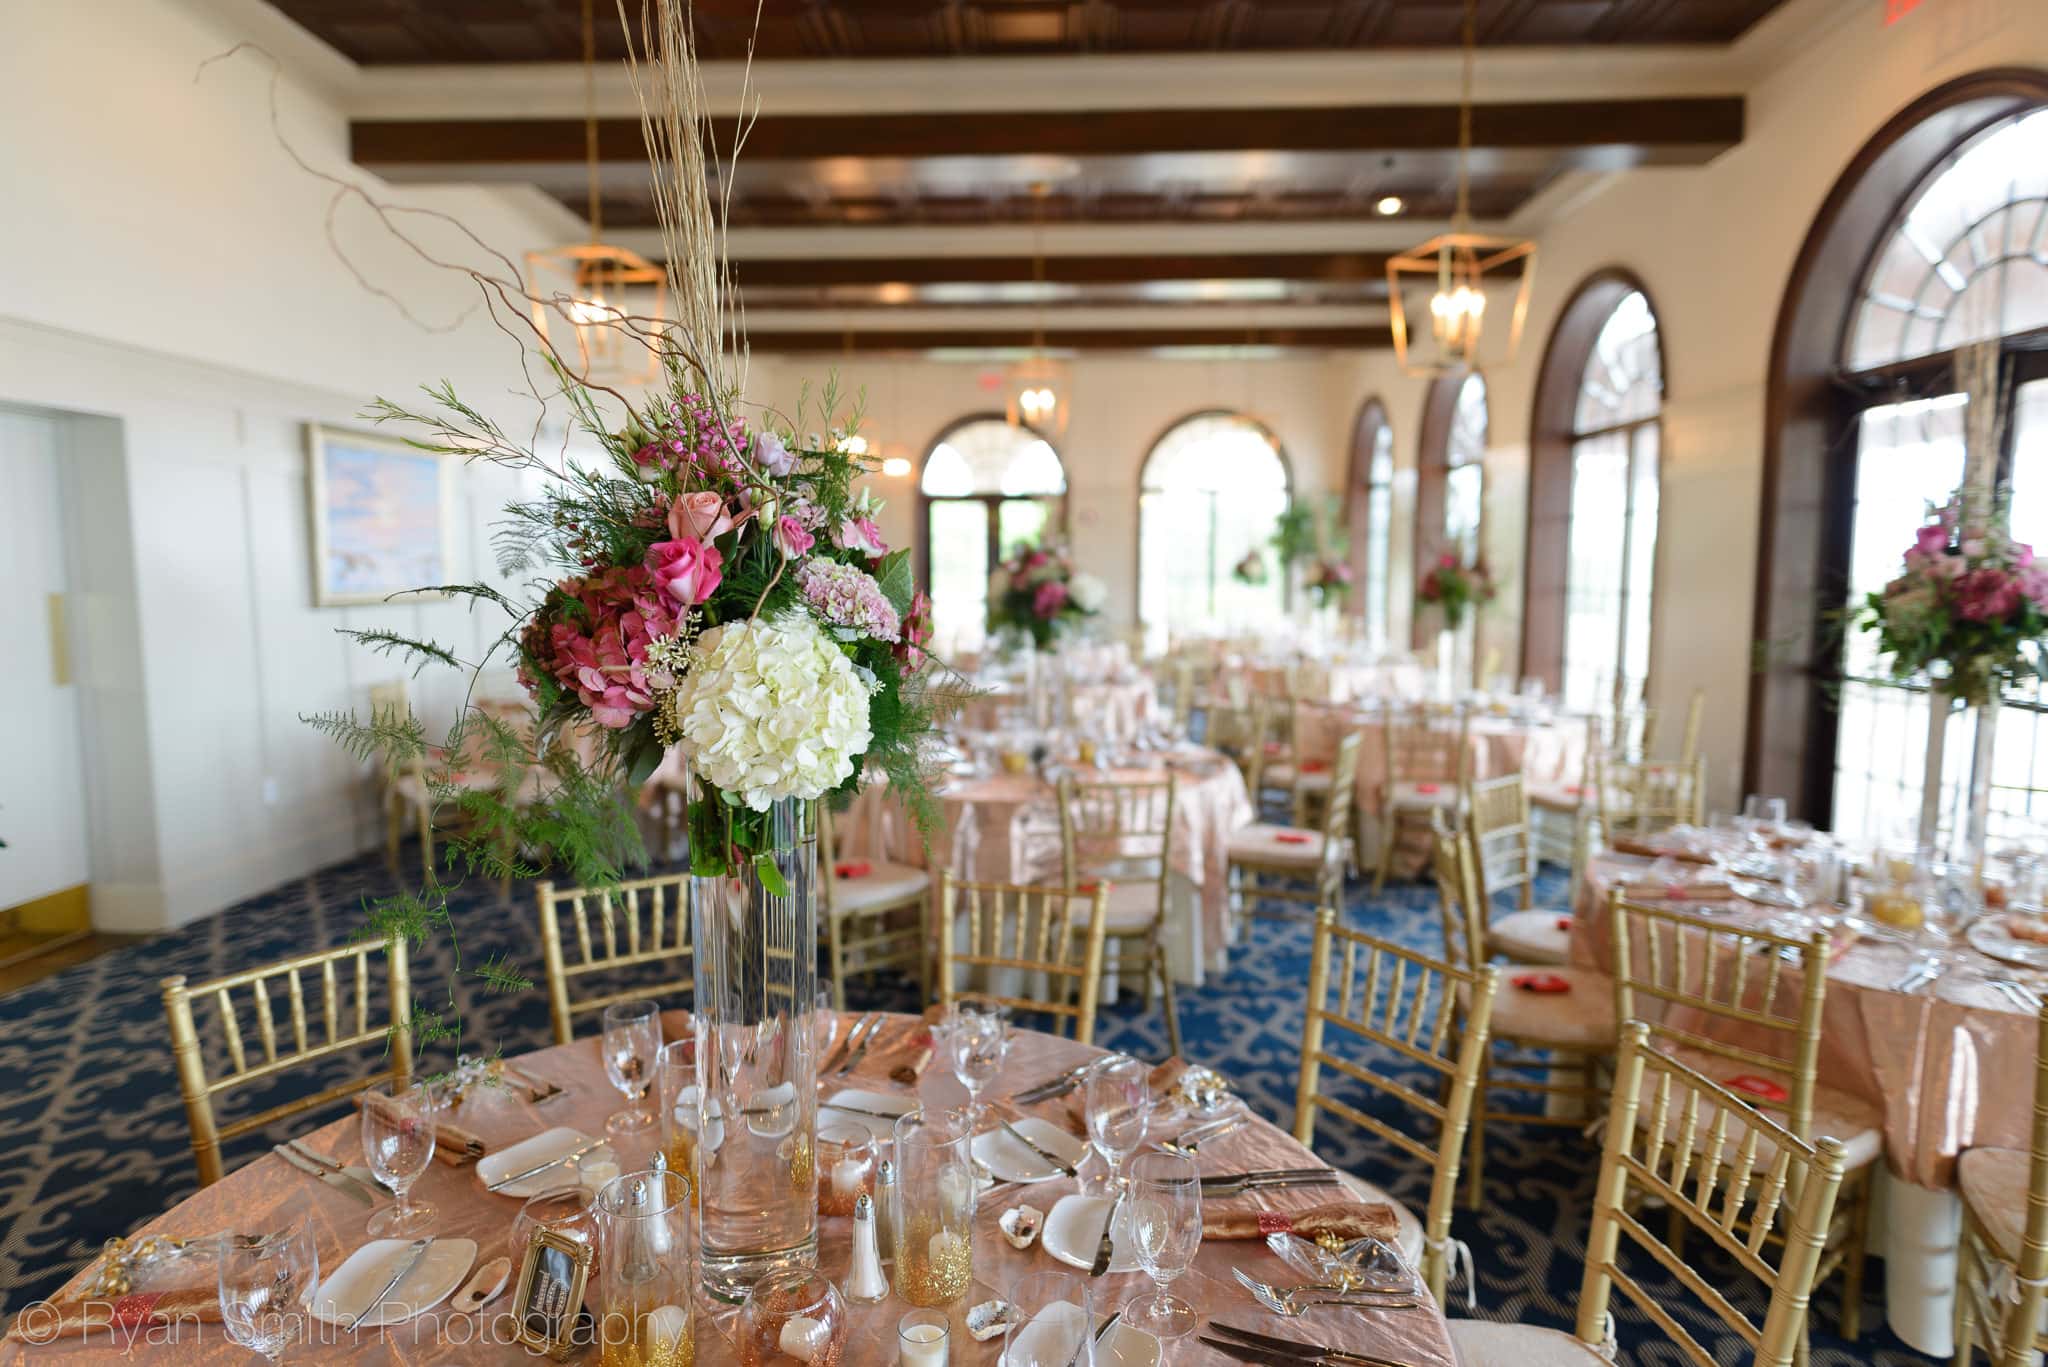 Details of tables in main ballroom - Grande Dunes Ocean Club